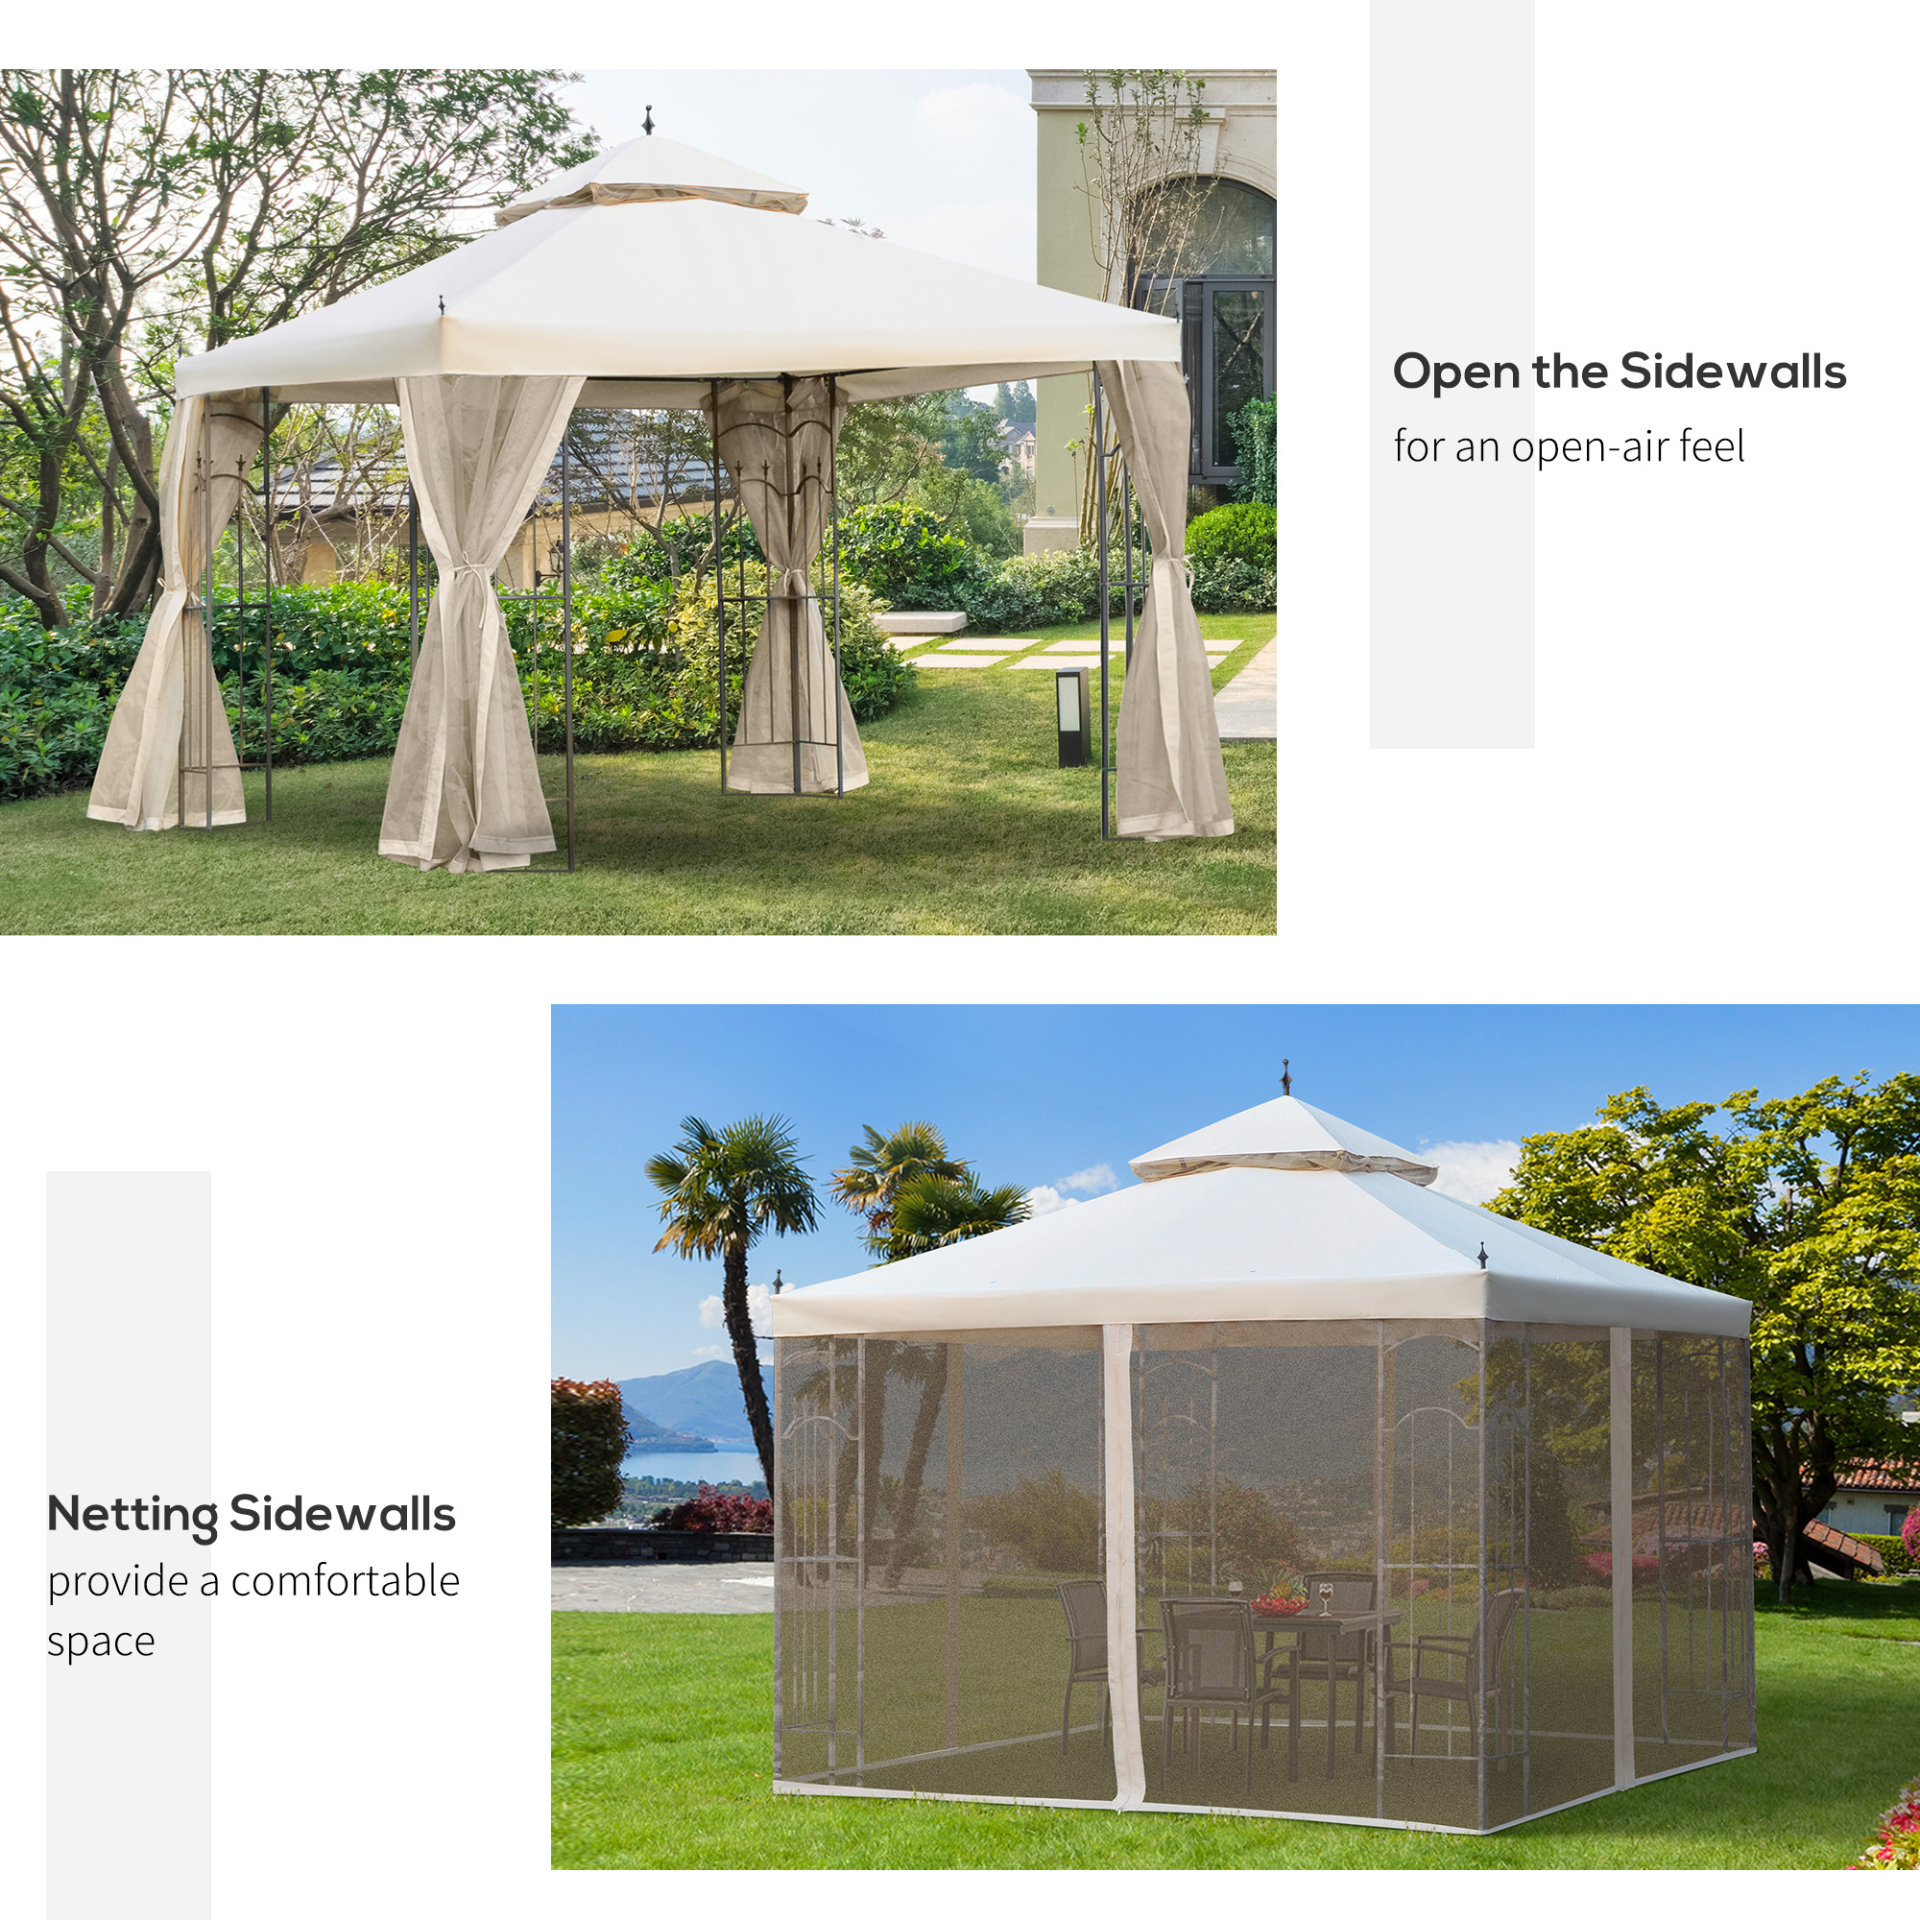 Outsunny 3(M)x3(M) Garden Gazebo Double Top Outdoor Canopy Patio Event Party Wedding Tent Backyard Sun Shade with Mesh Curtain Metal Frame - Cream White